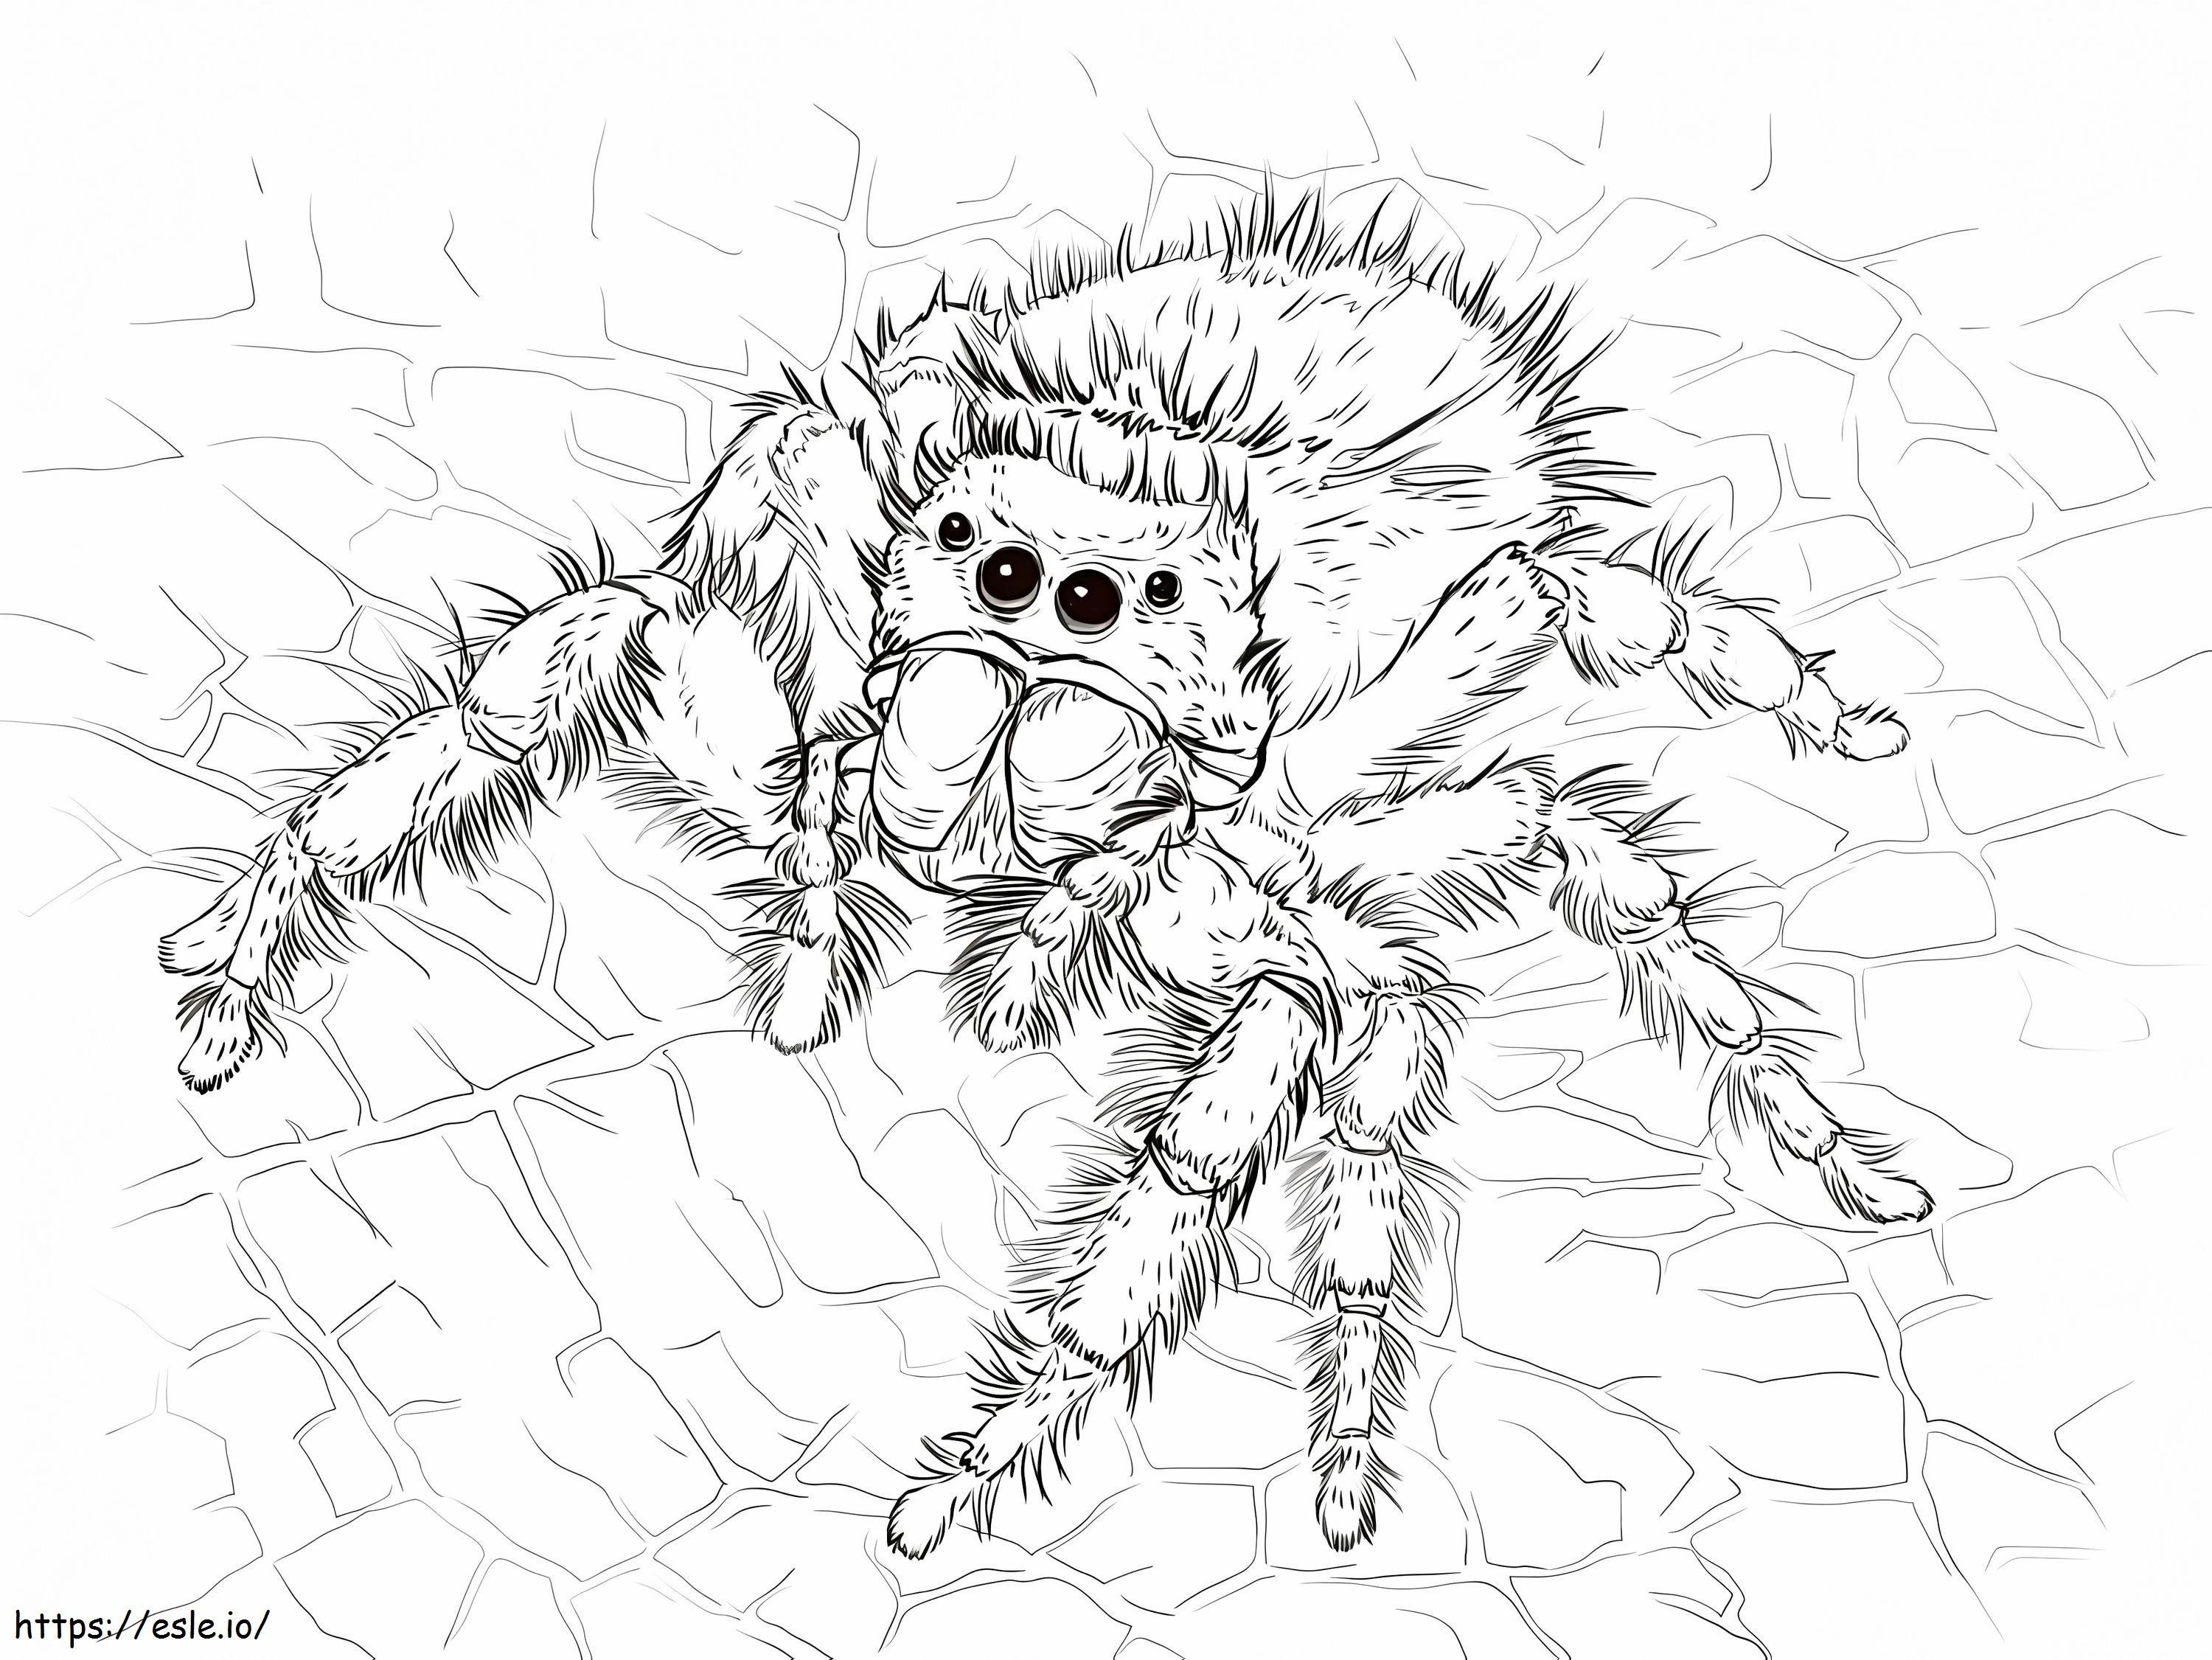 Daring Jumping Spider coloring page